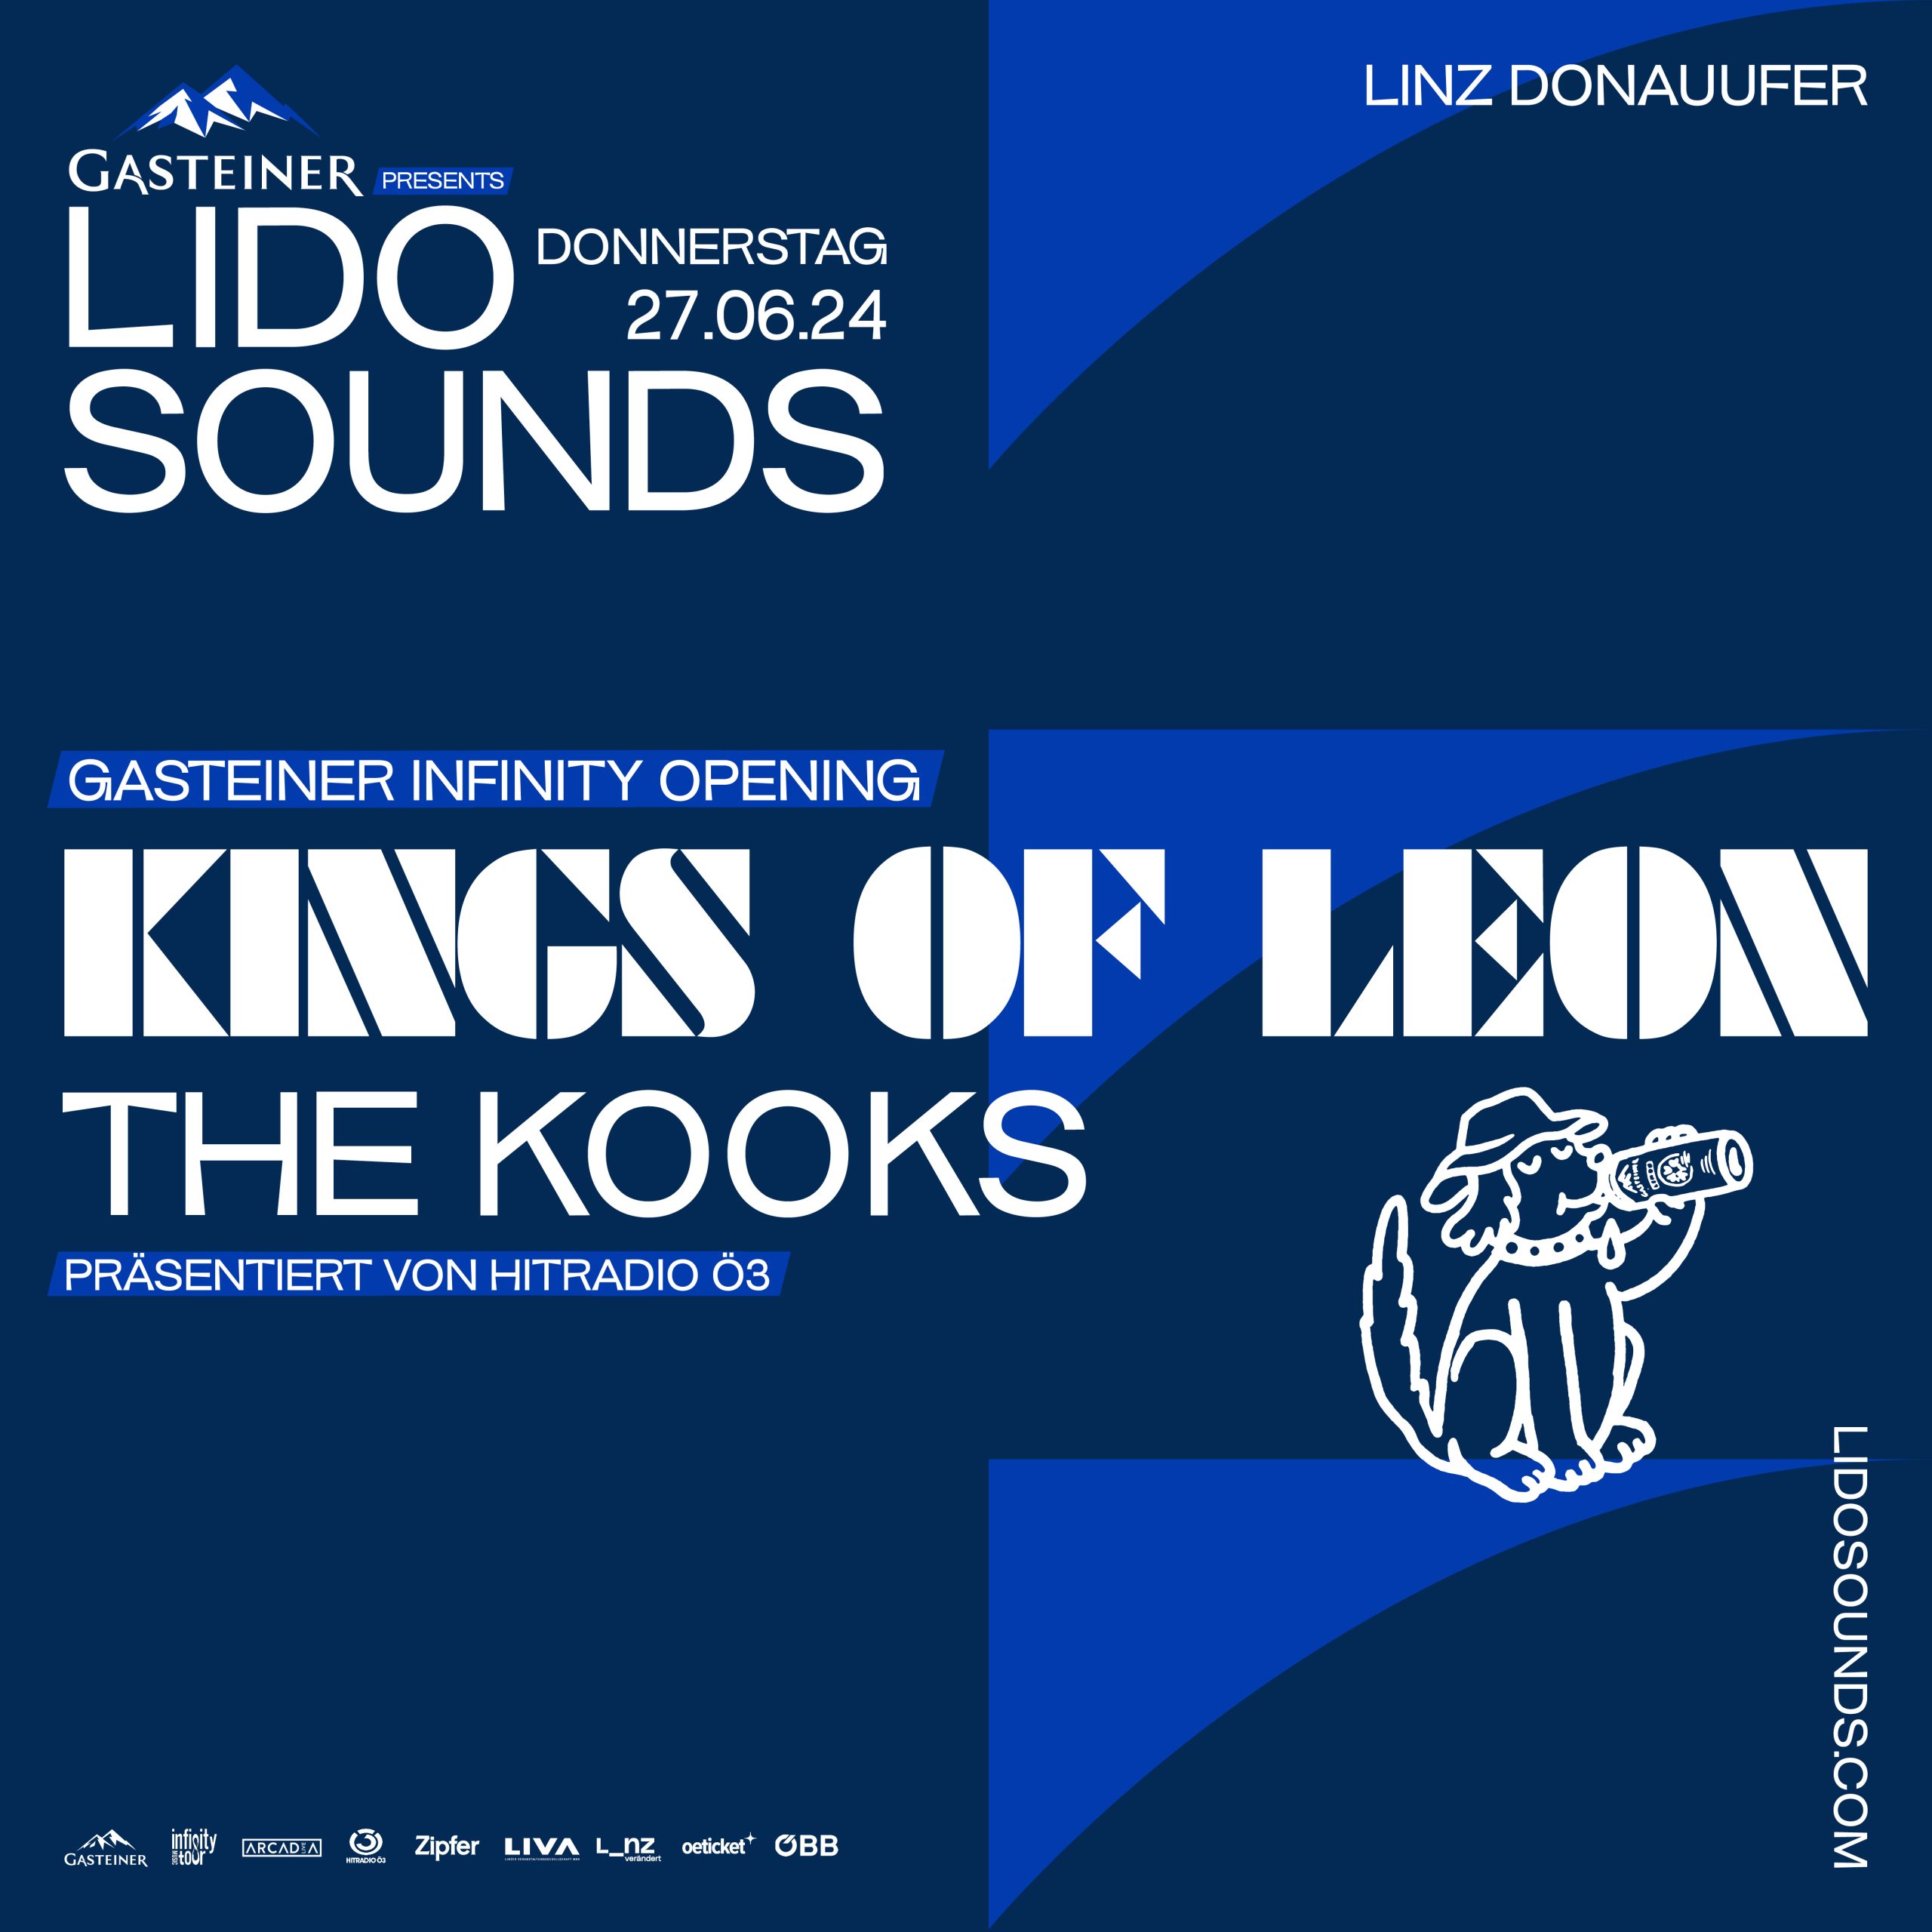 LIDO SOUNDS - Gasteiner Infinity Opening am 27. June 2024 @ Linz Donauufer.